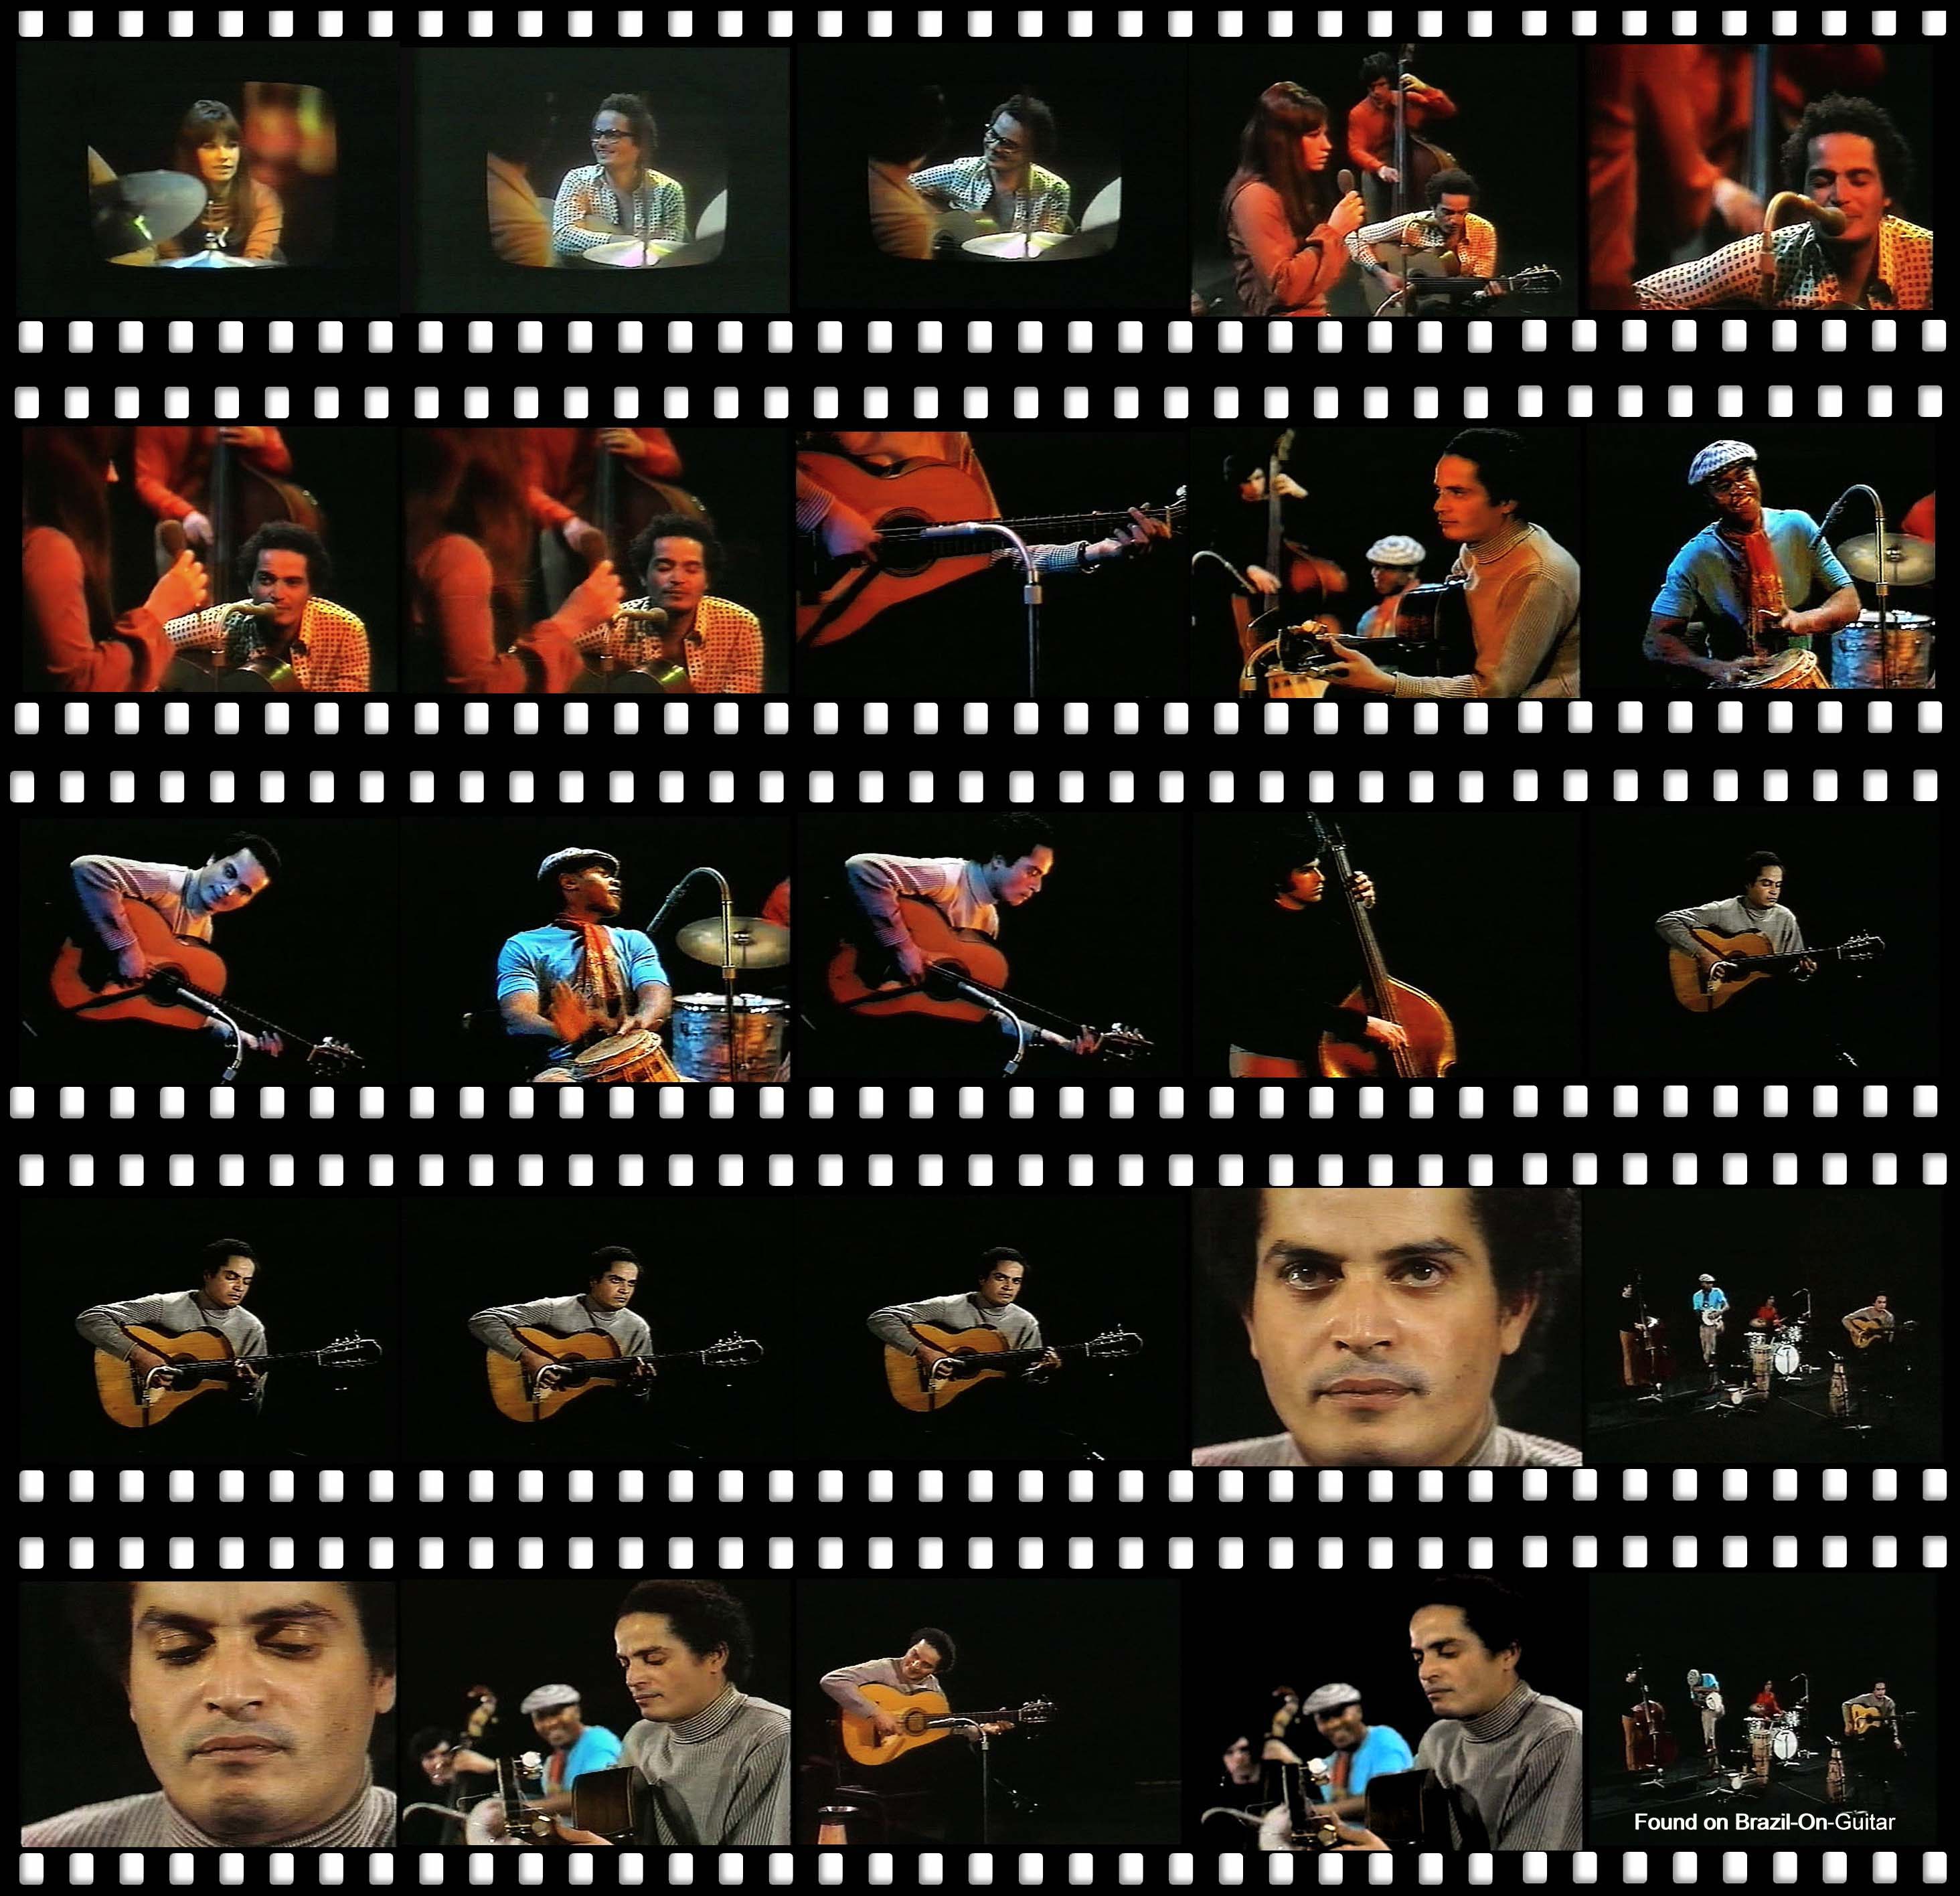 1970 - The Astrud Gilberto Show